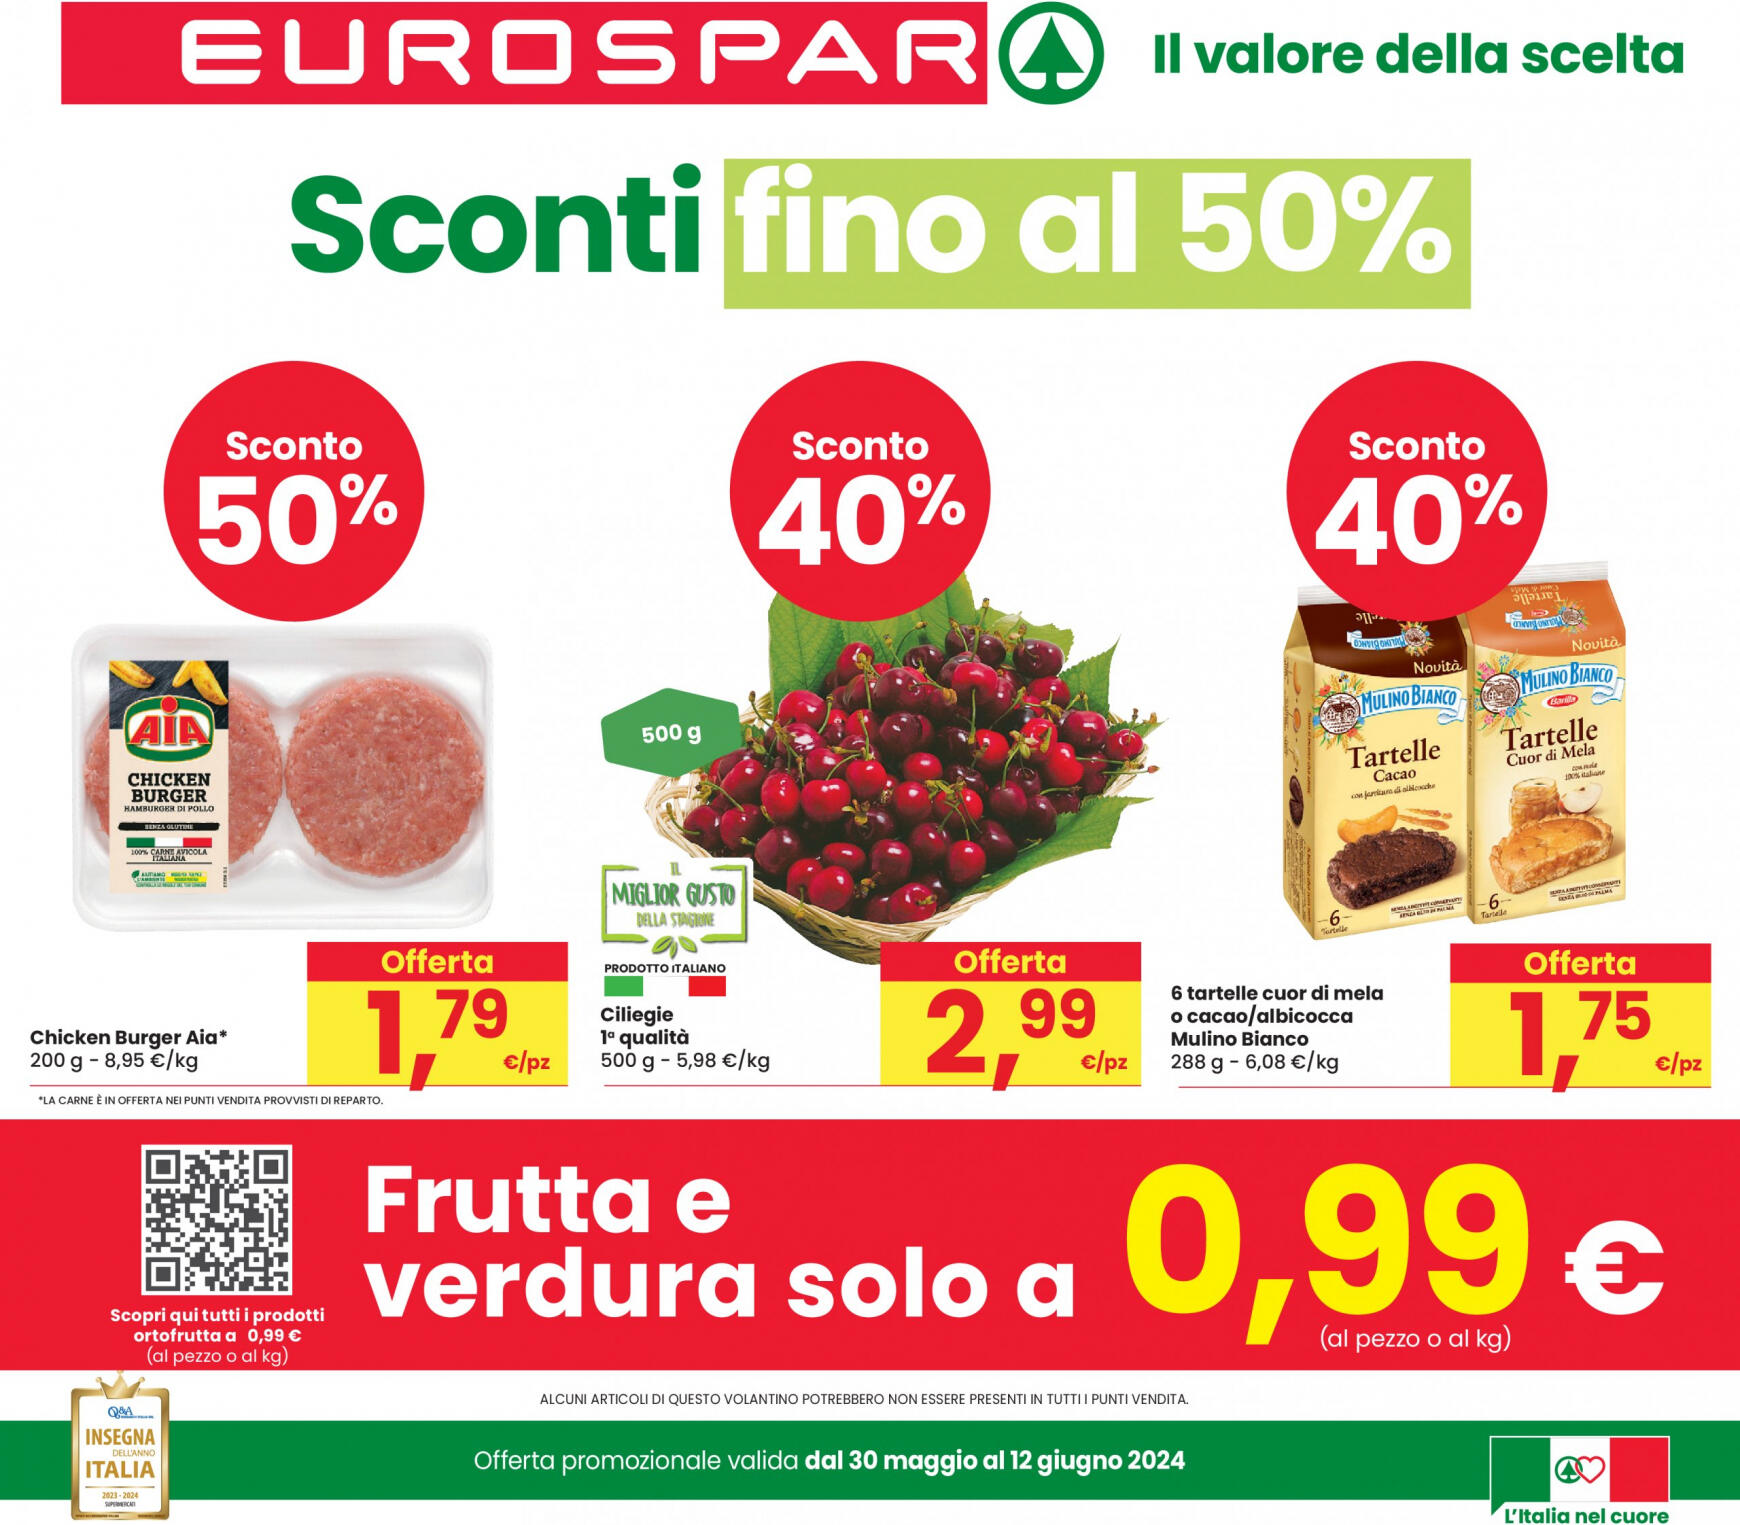 eurospar - Nuovo volantino Eurospar 30.05. - 12.06. - page: 1